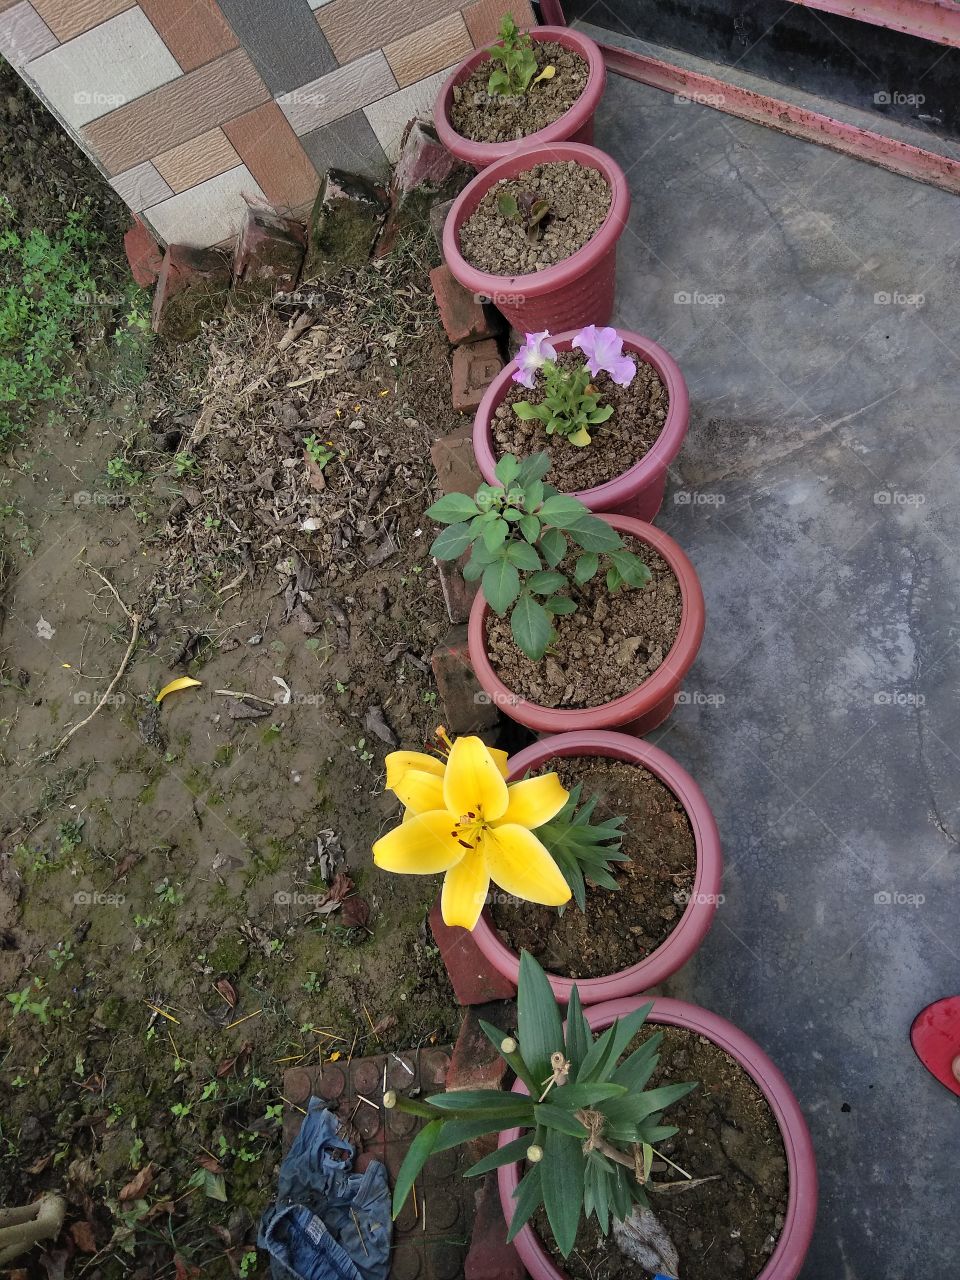 Like a lilly flower yellowish
#Rajtagged